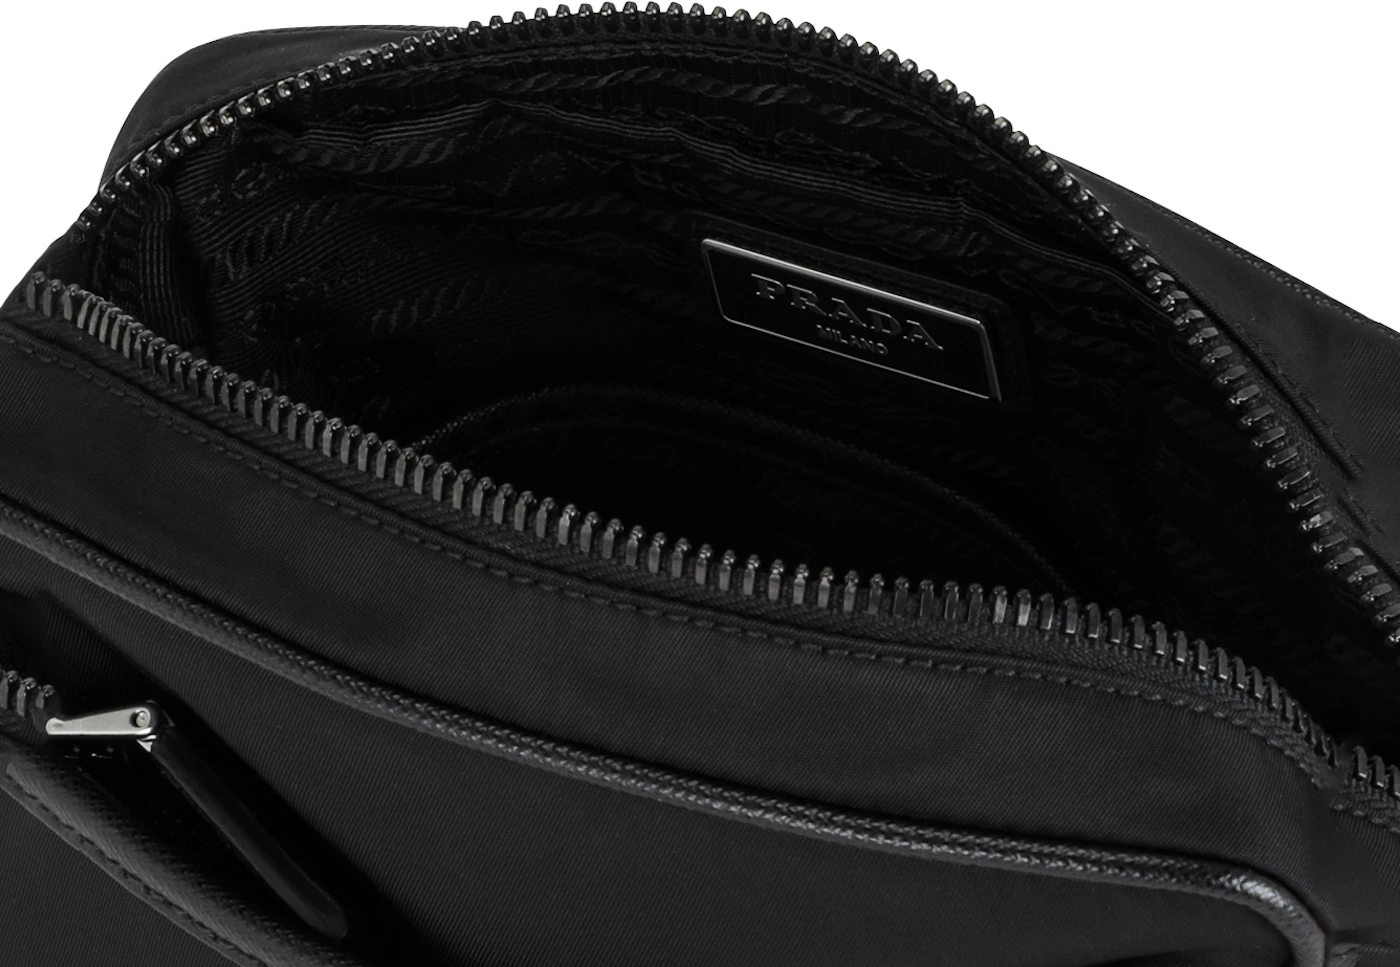 Prada Crossbody Bag Small Black in Nylon with Silver-tone - US